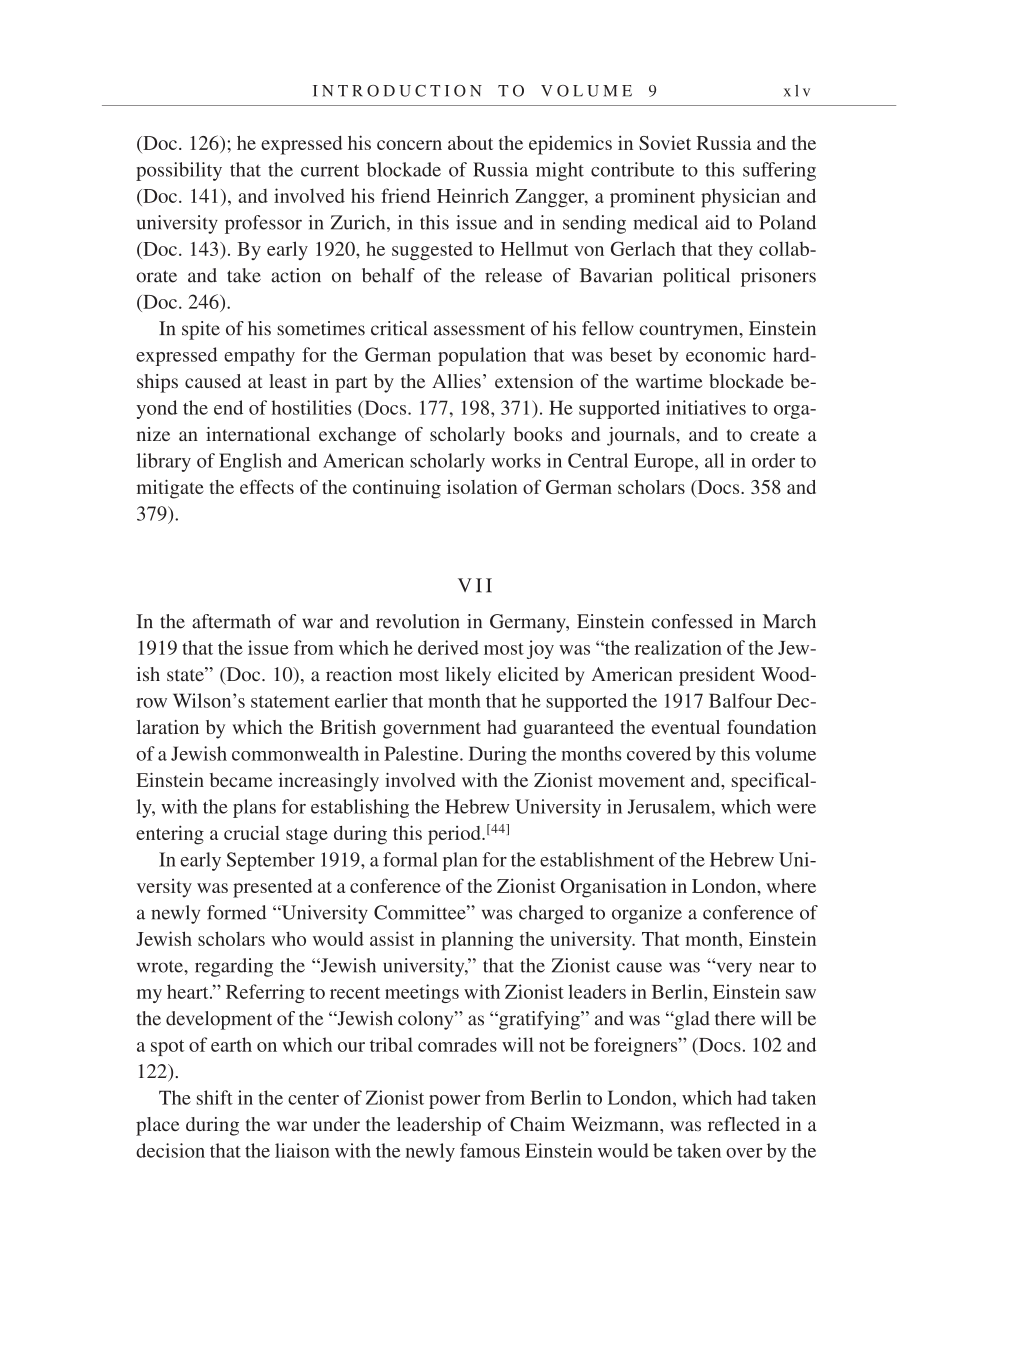 Volume 9: The Berlin Years: Correspondence January 1919-April 1920 page xlv